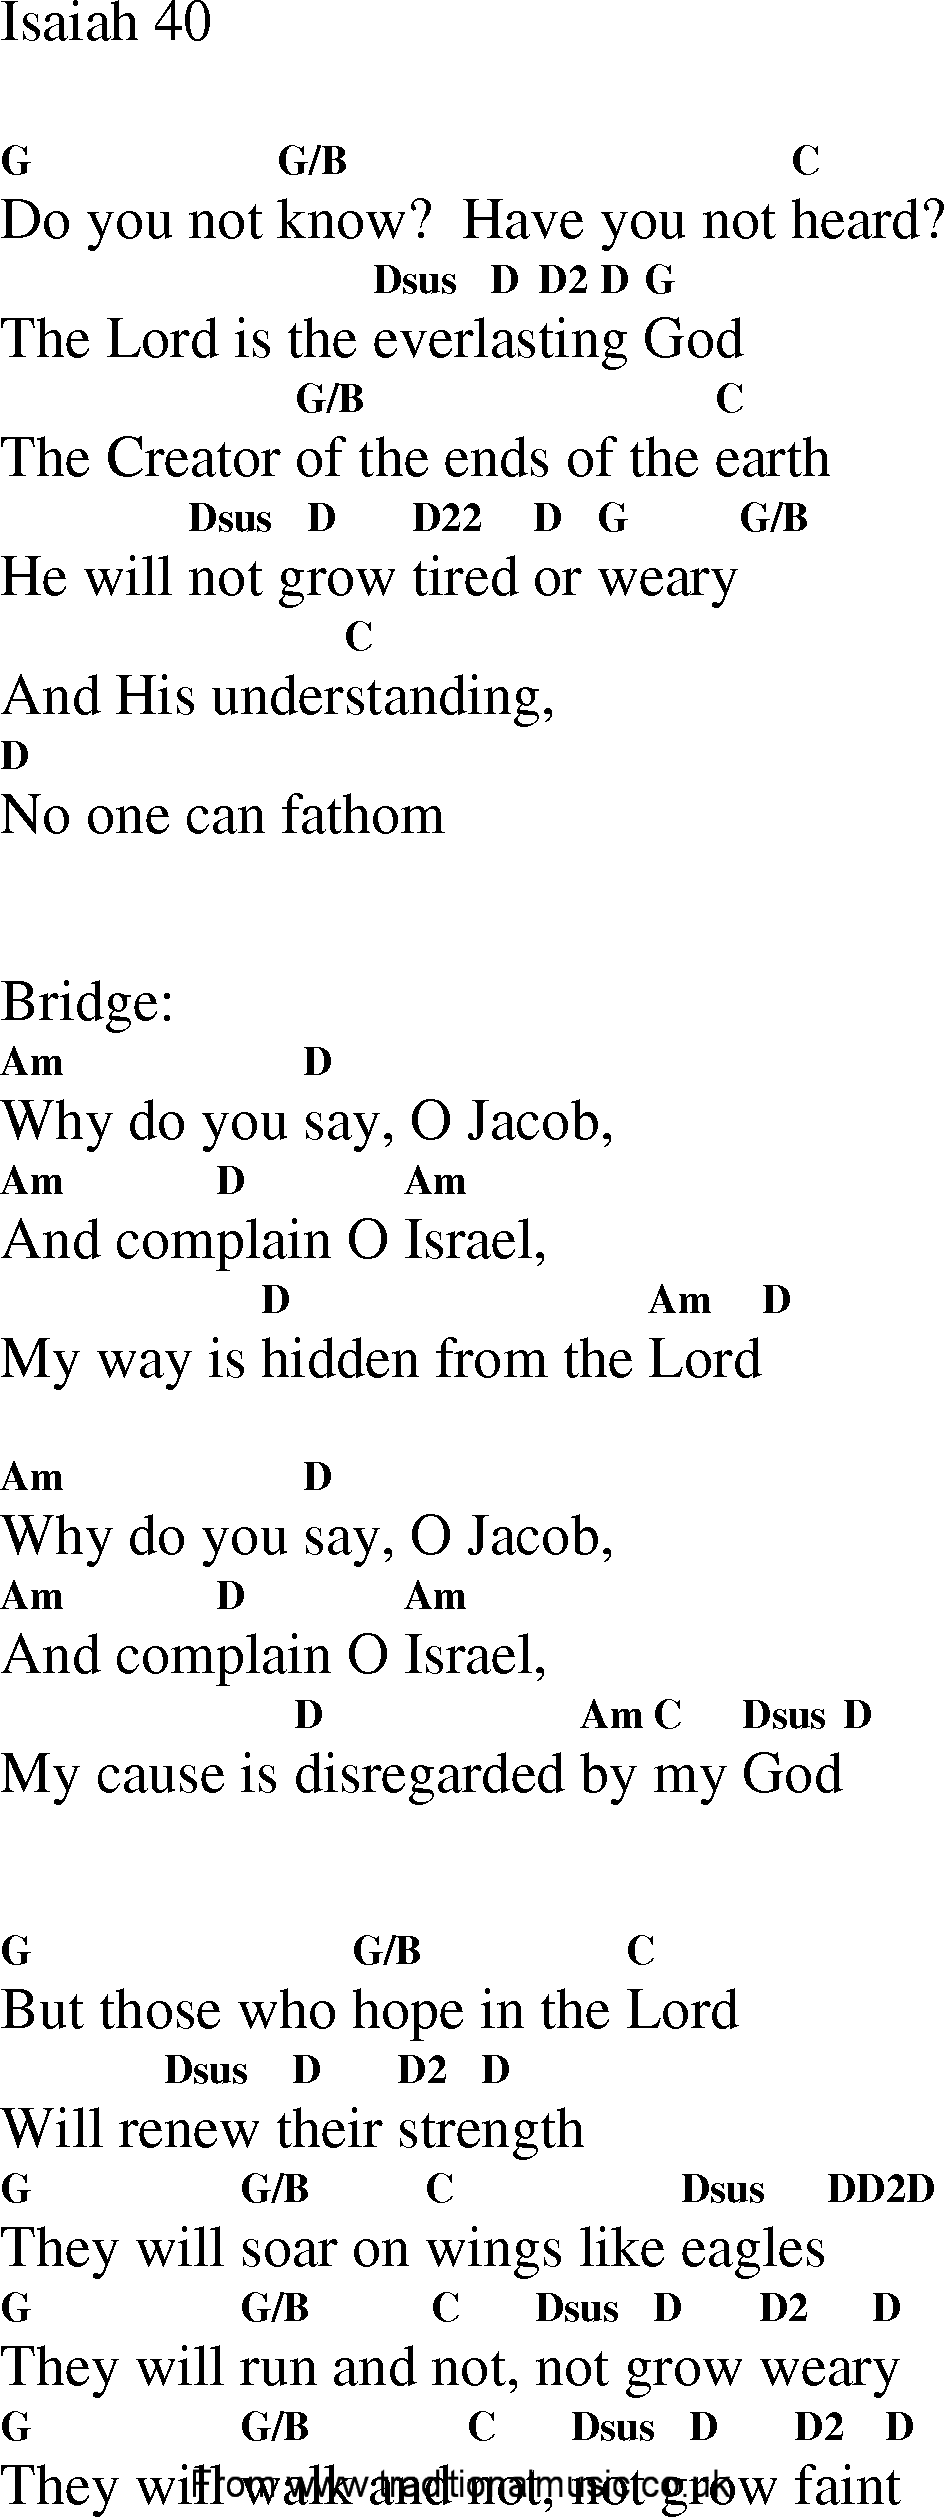 Gospel Song: isaiah_40, lyrics and chords.